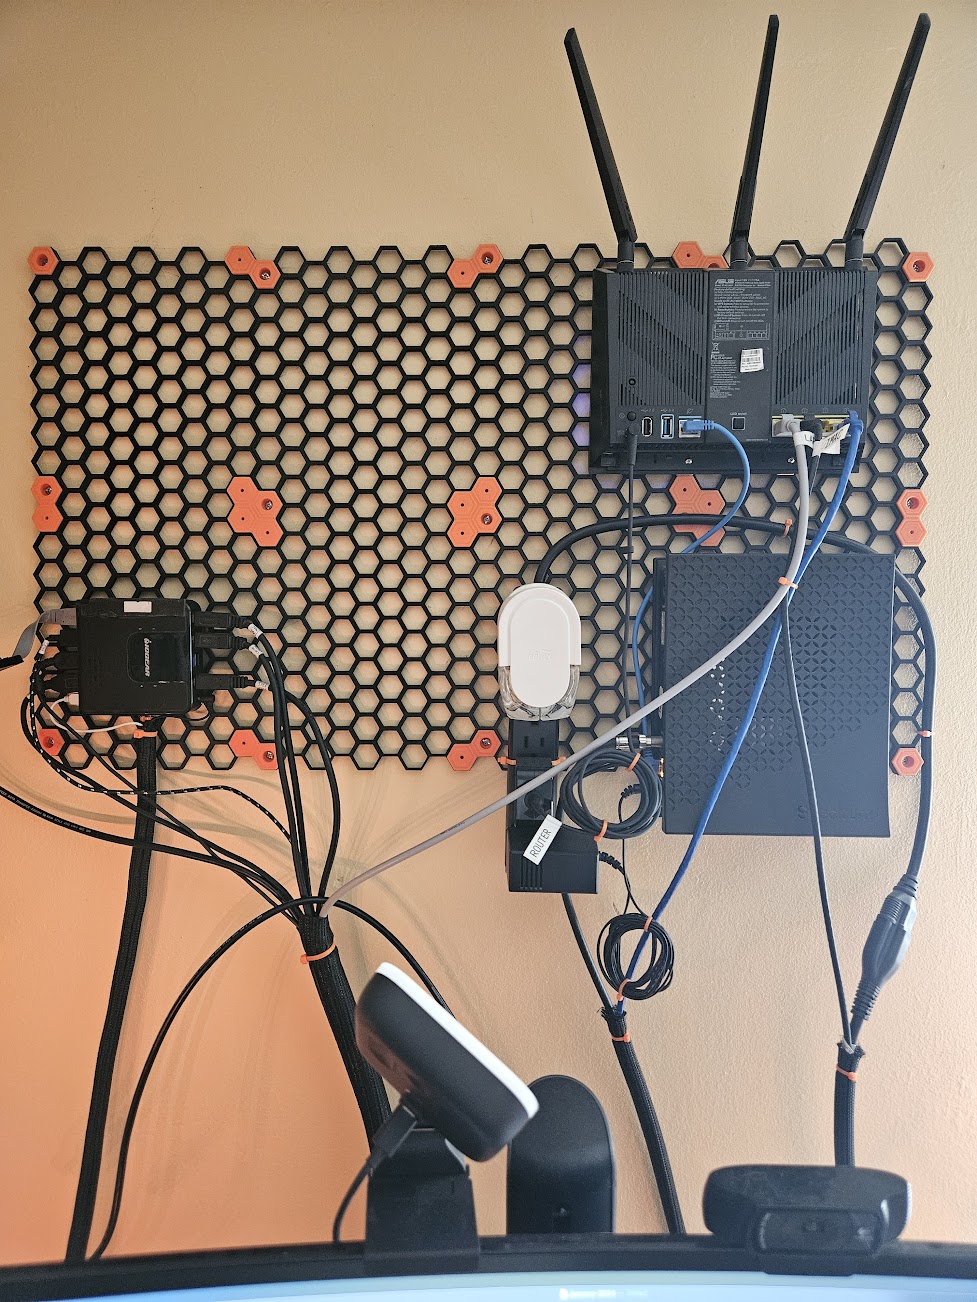 Network / Computer Wall